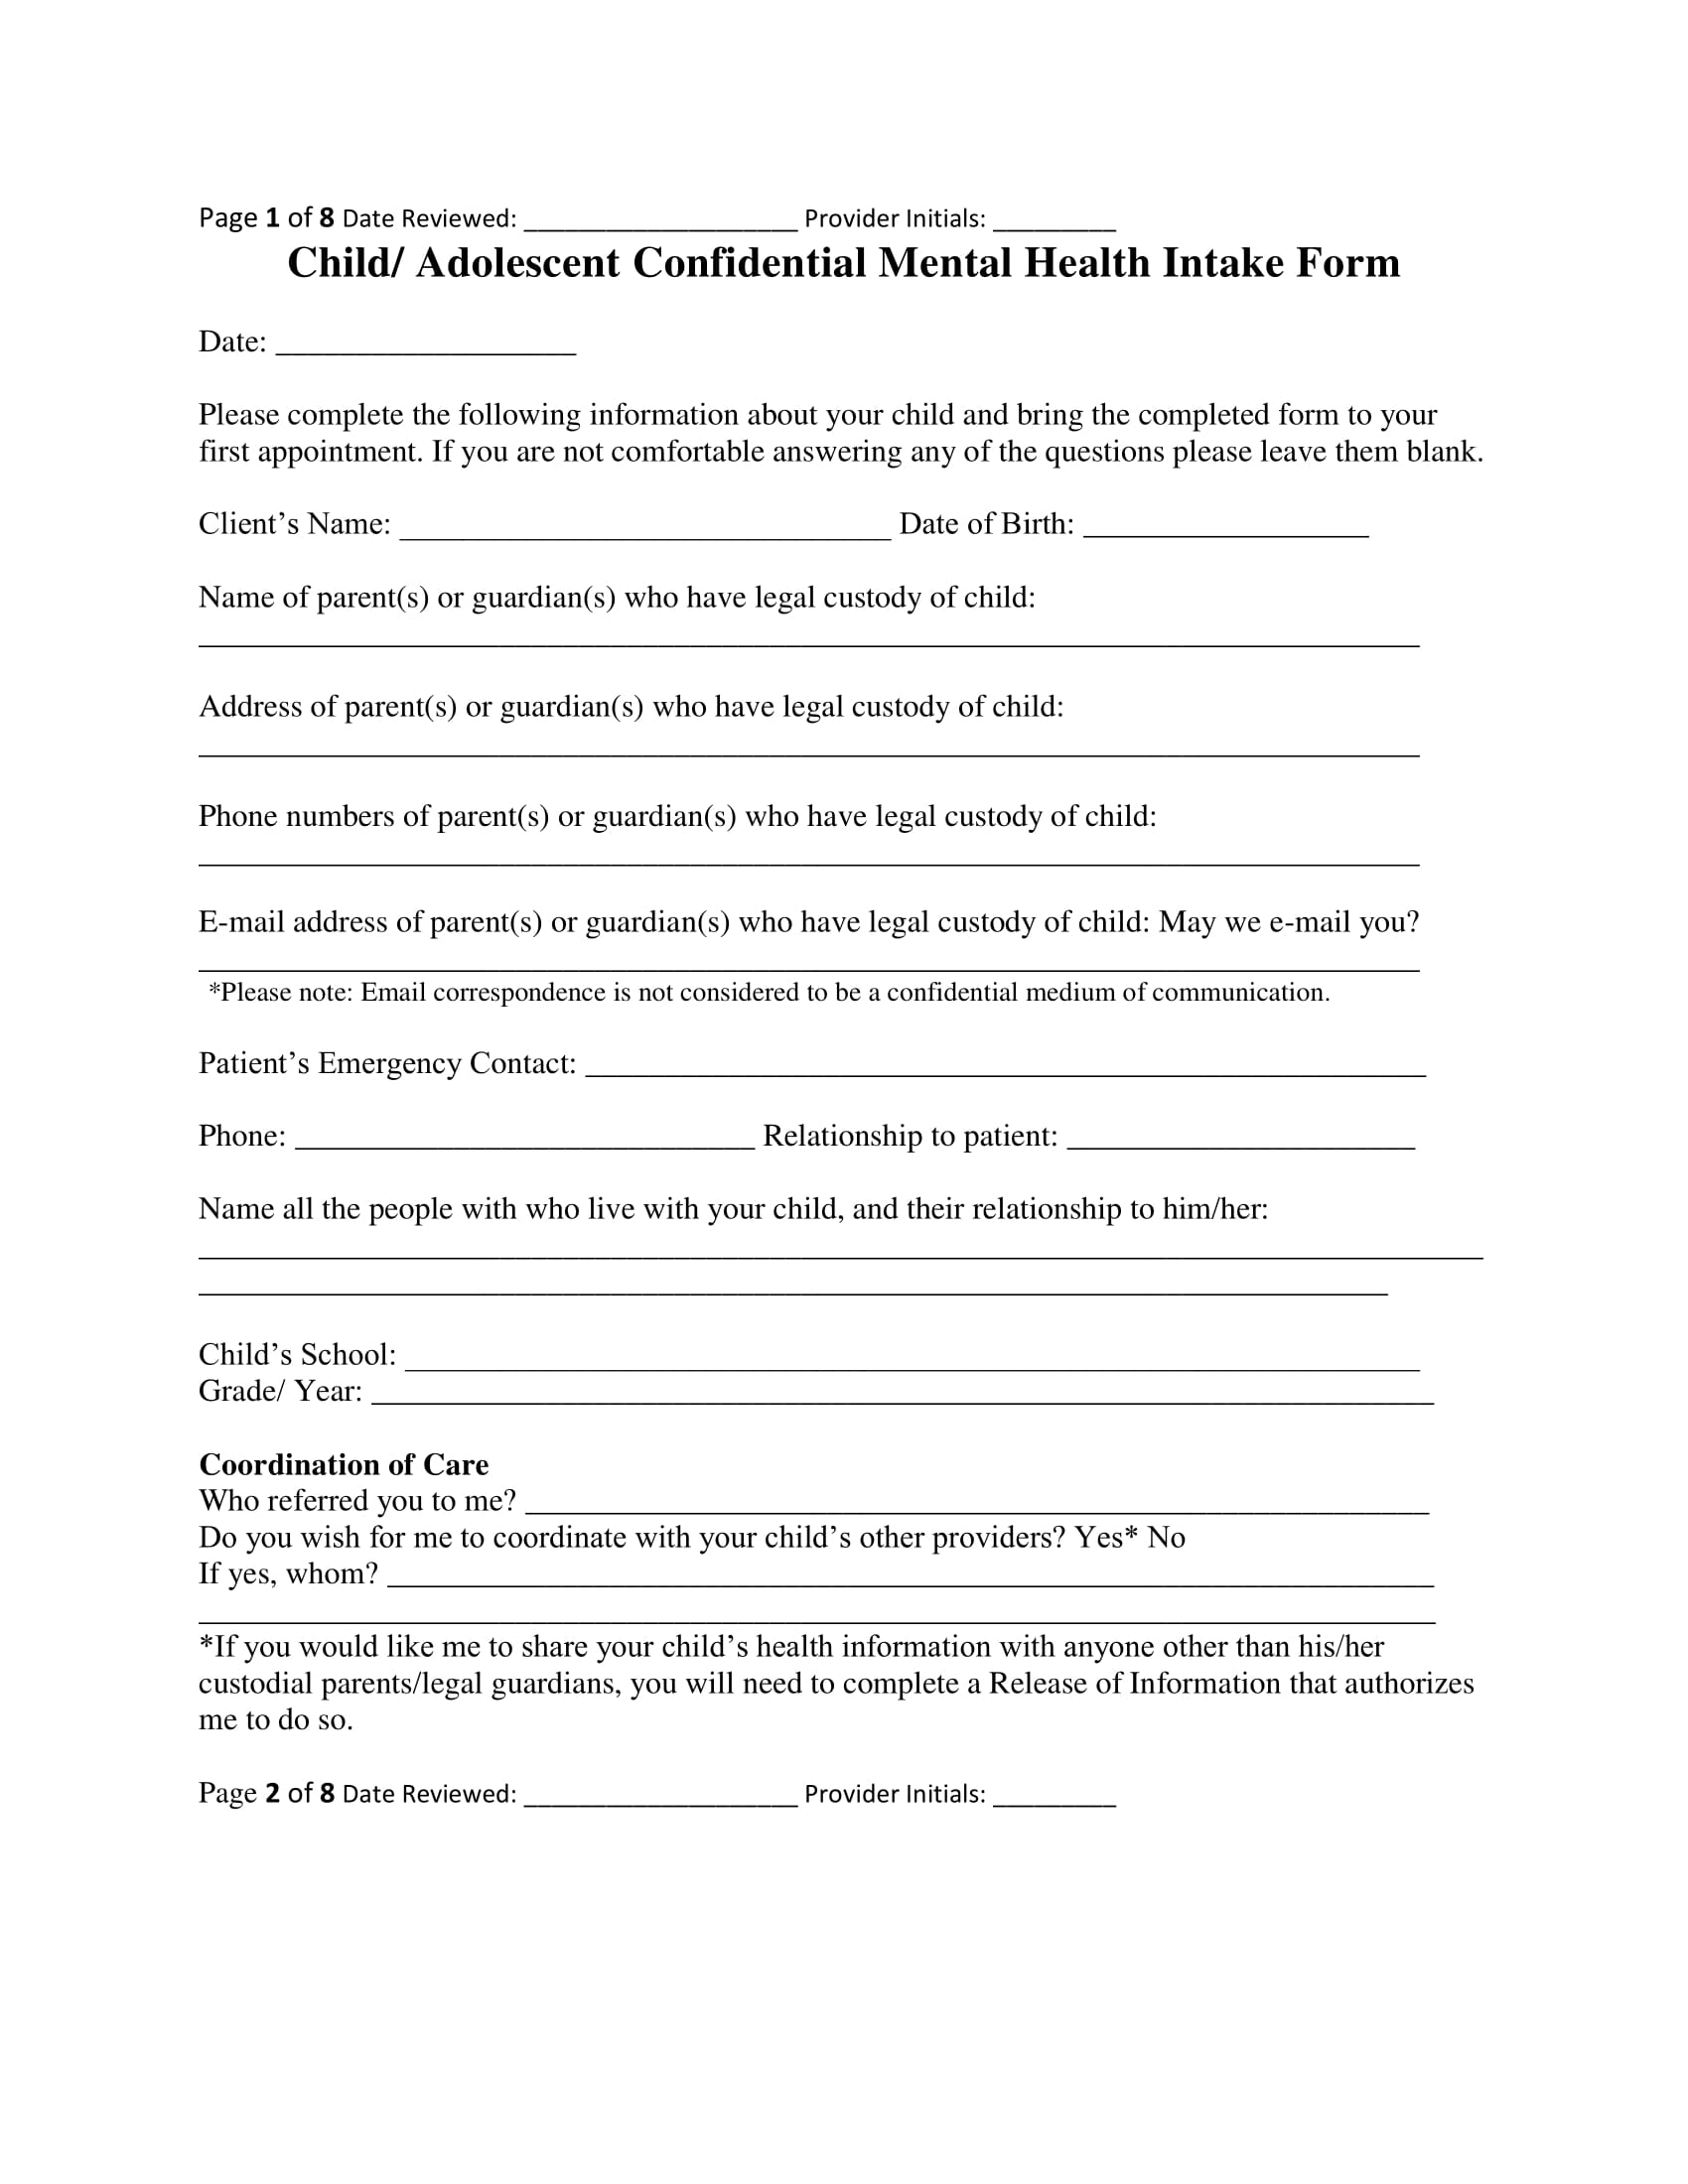 confidential mental health intake form 1